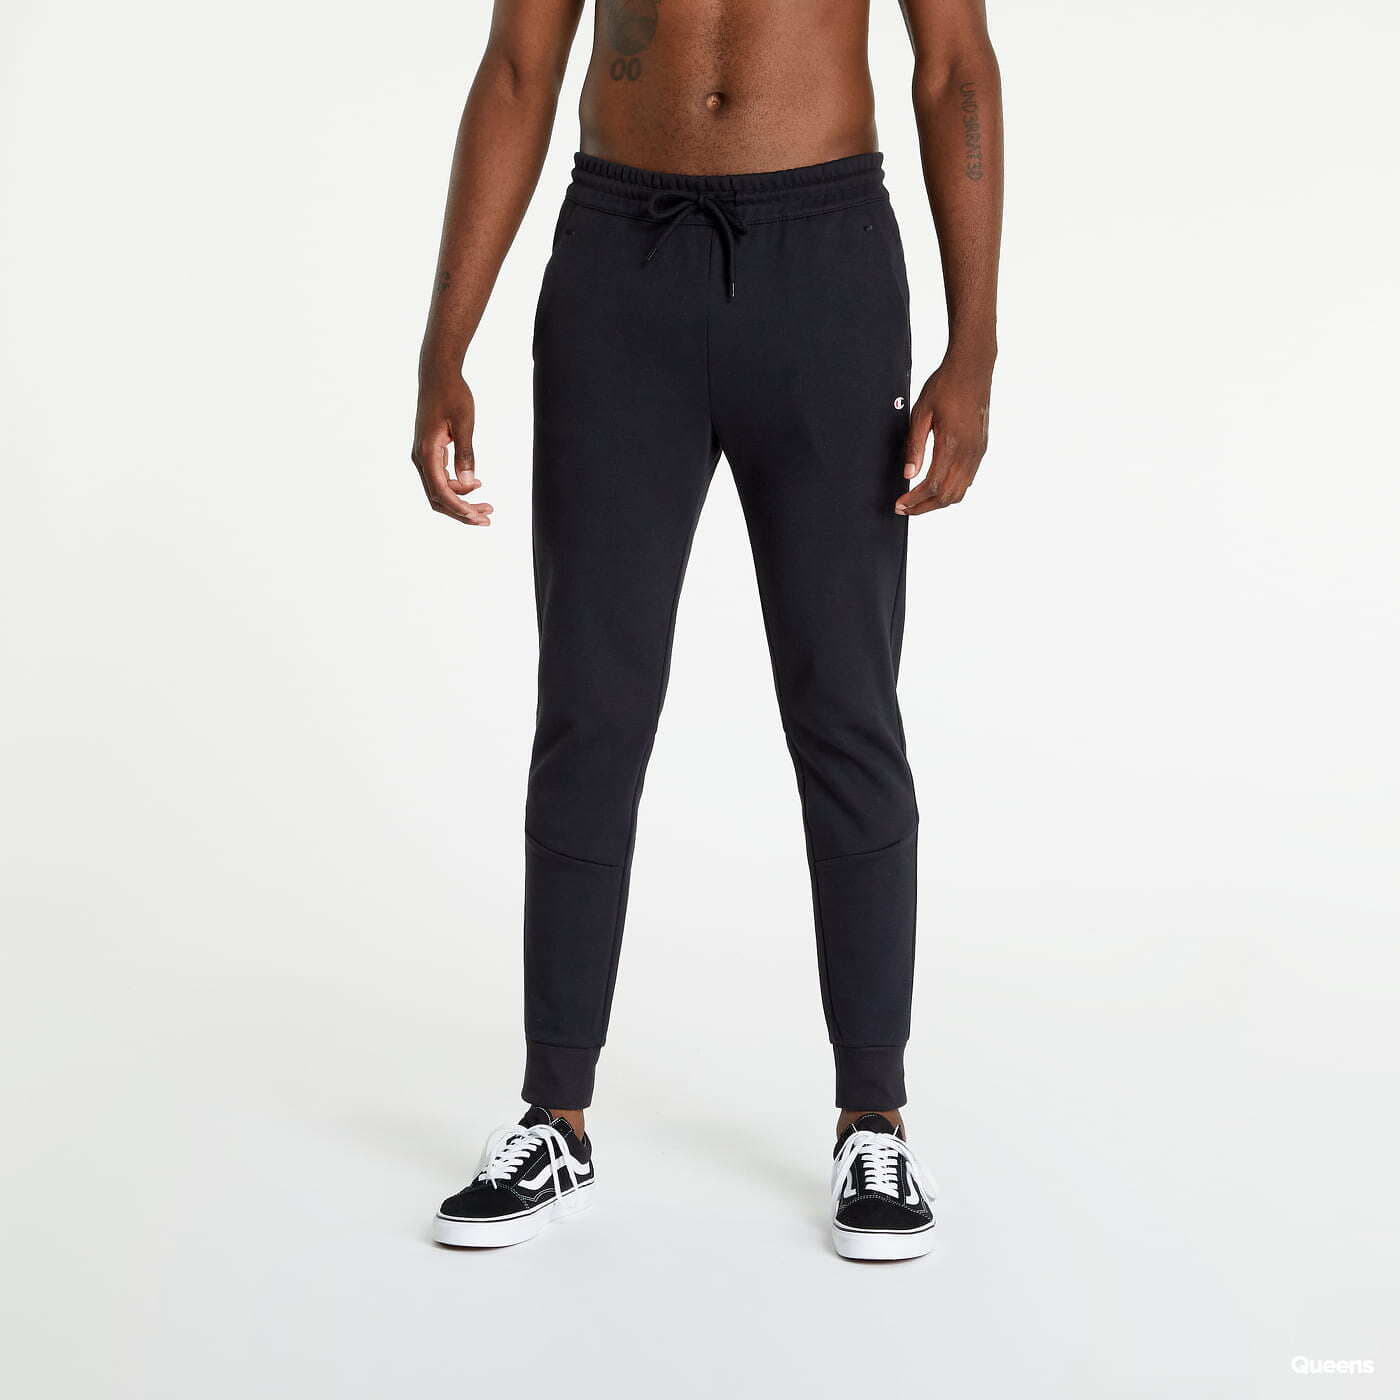 Jogginghosen Champion Sweatpants černé